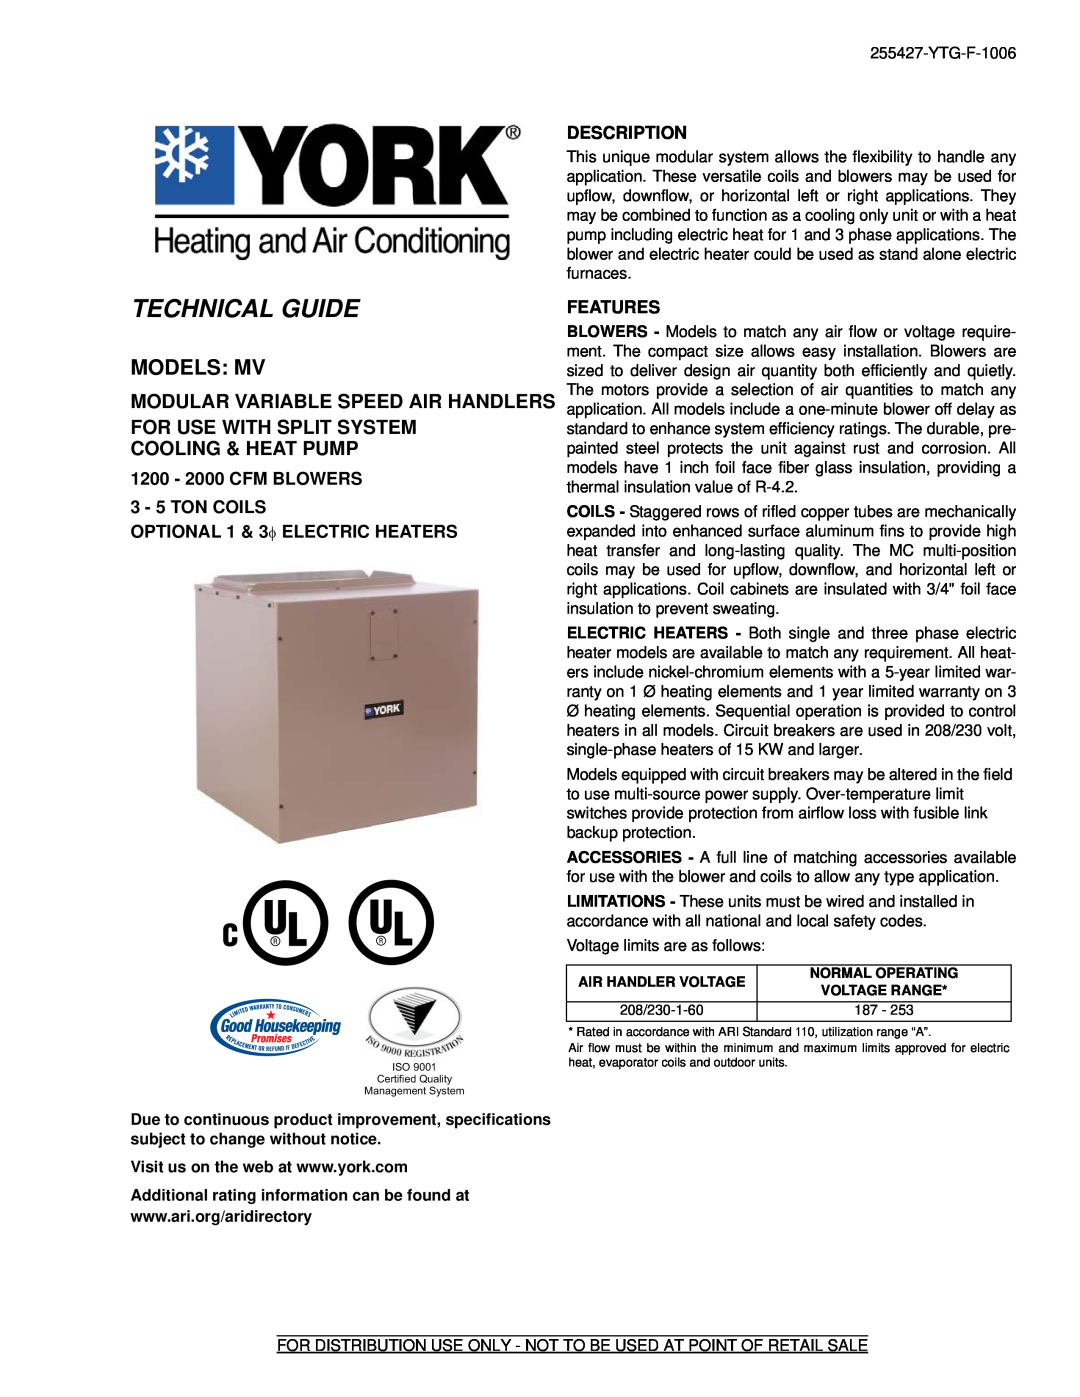 York MV specifications 1200 - 2000 CFM BLOWERS 3 - 5 TON COILS, OPTIONAL 1 & 3φ ELECTRIC HEATERS, Description, Features 